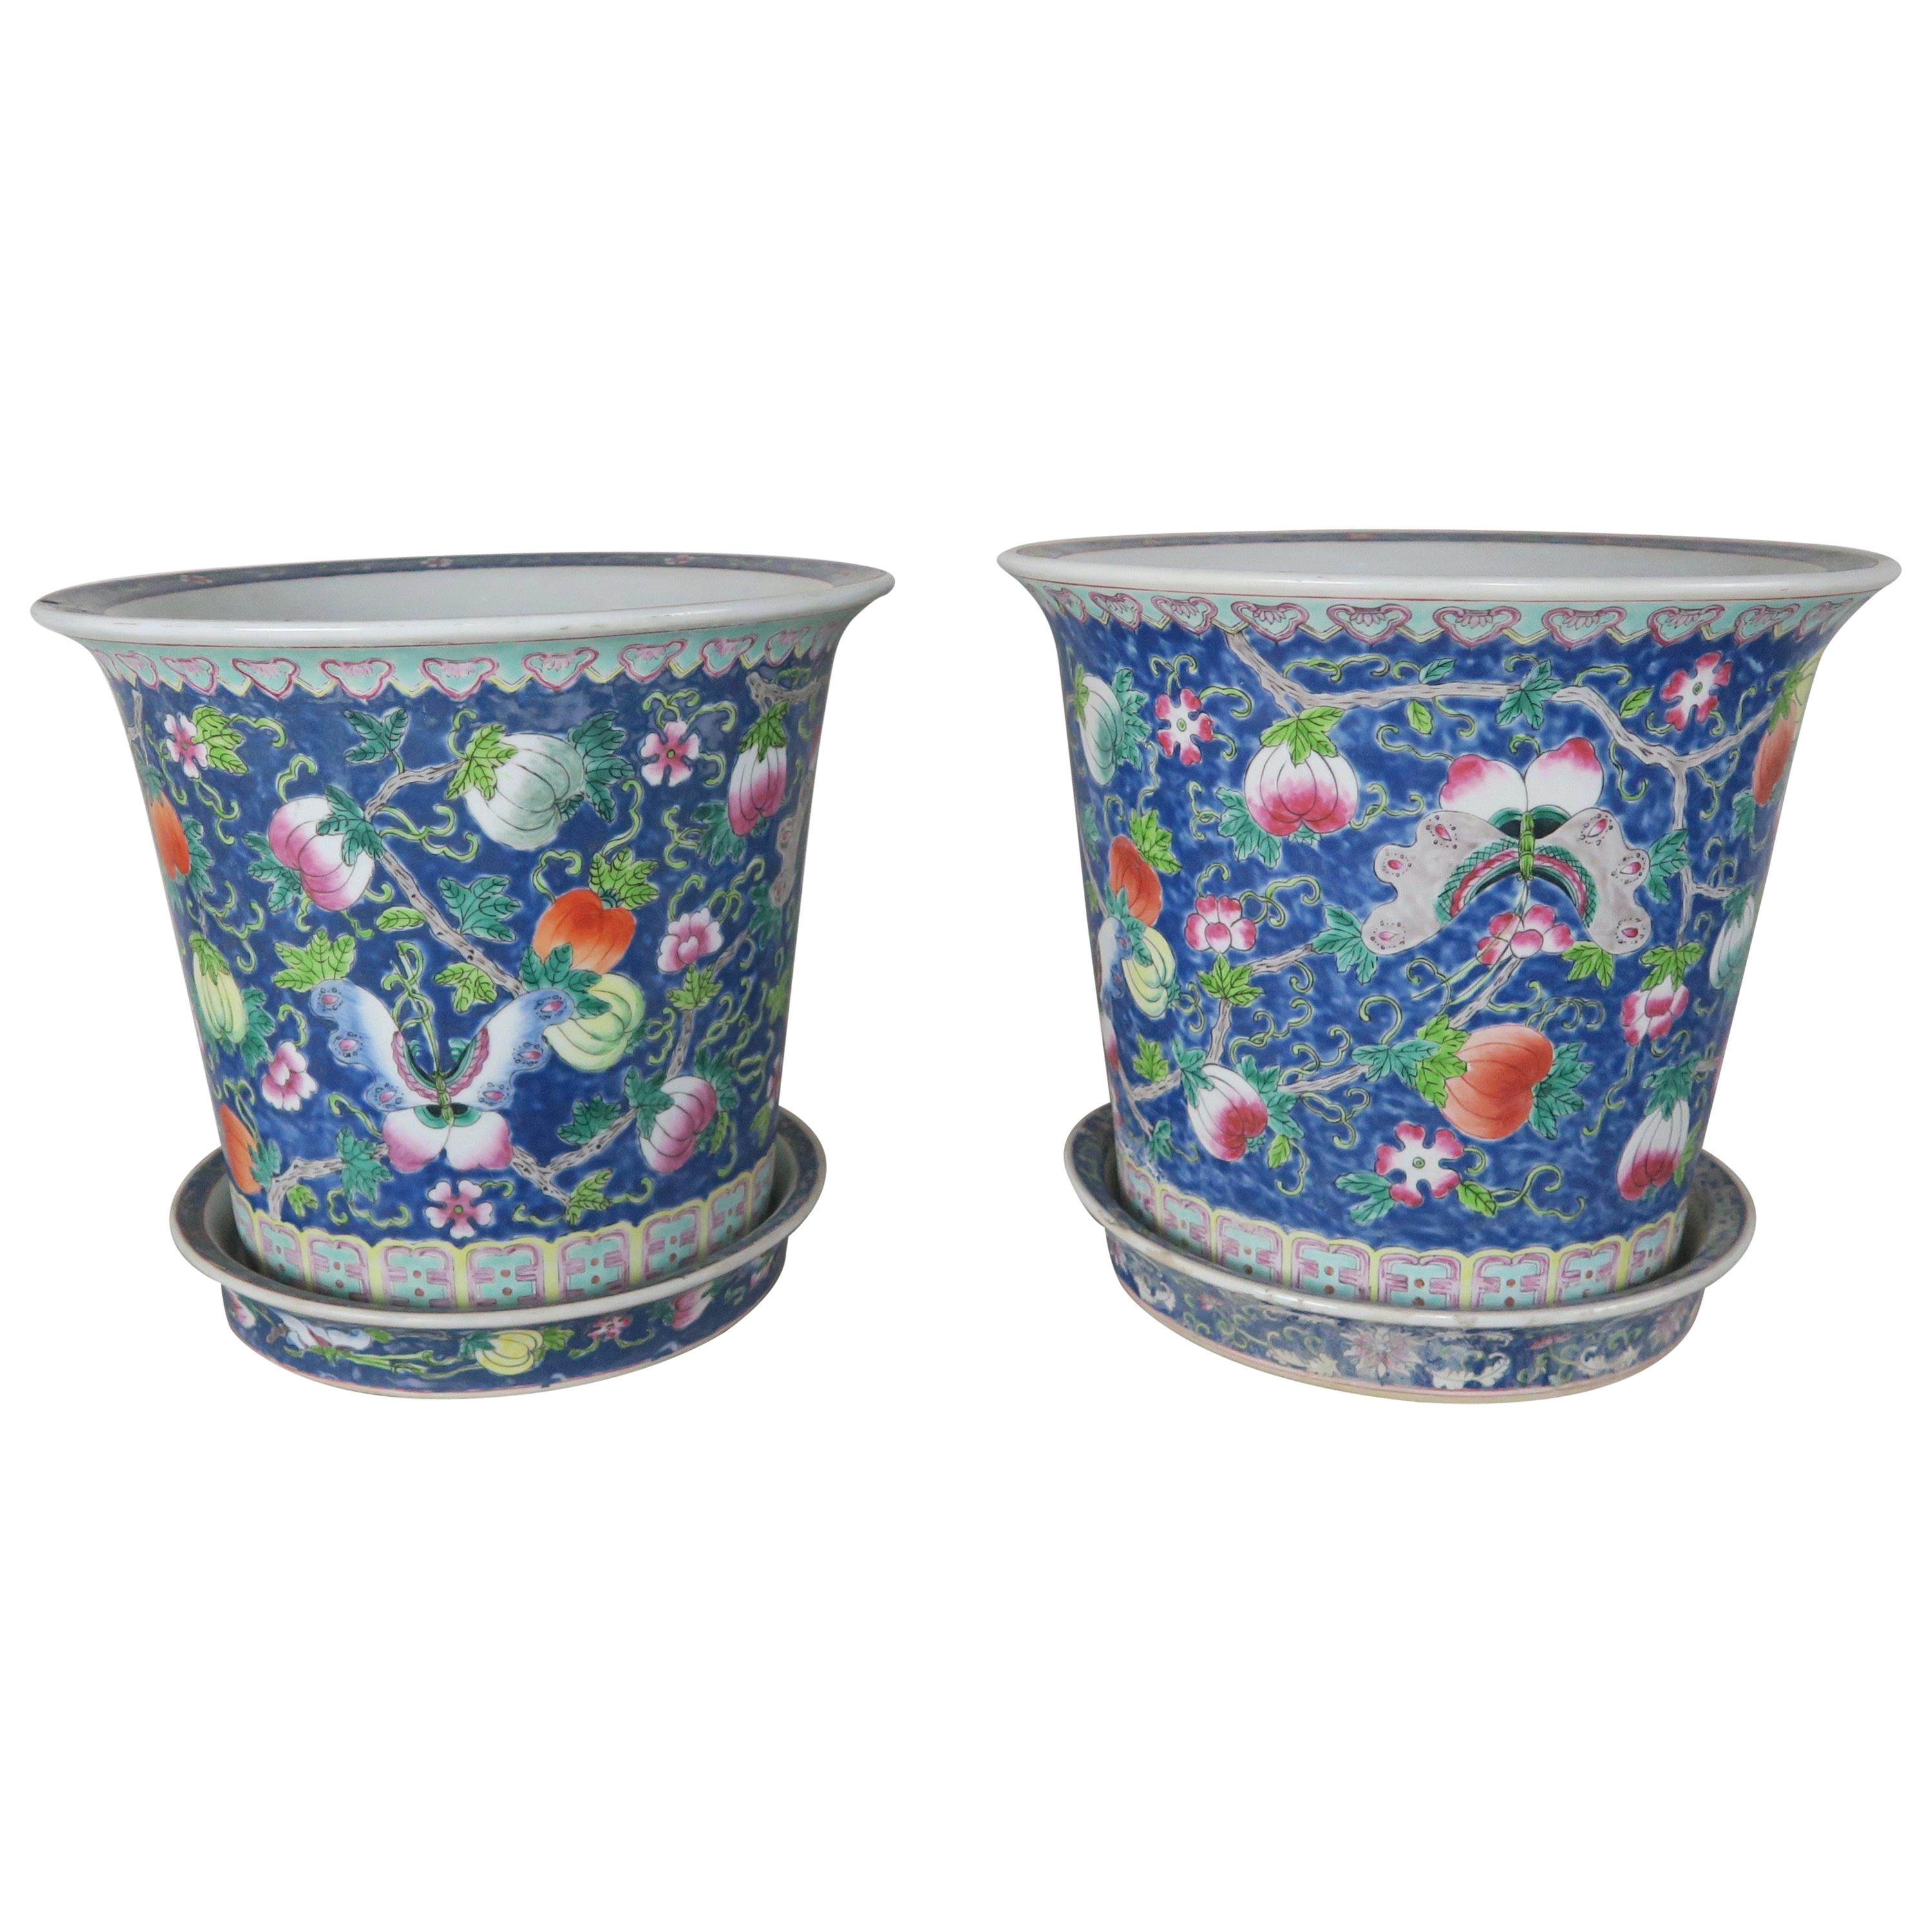 Pair of Hand Painted Ceramic Pots